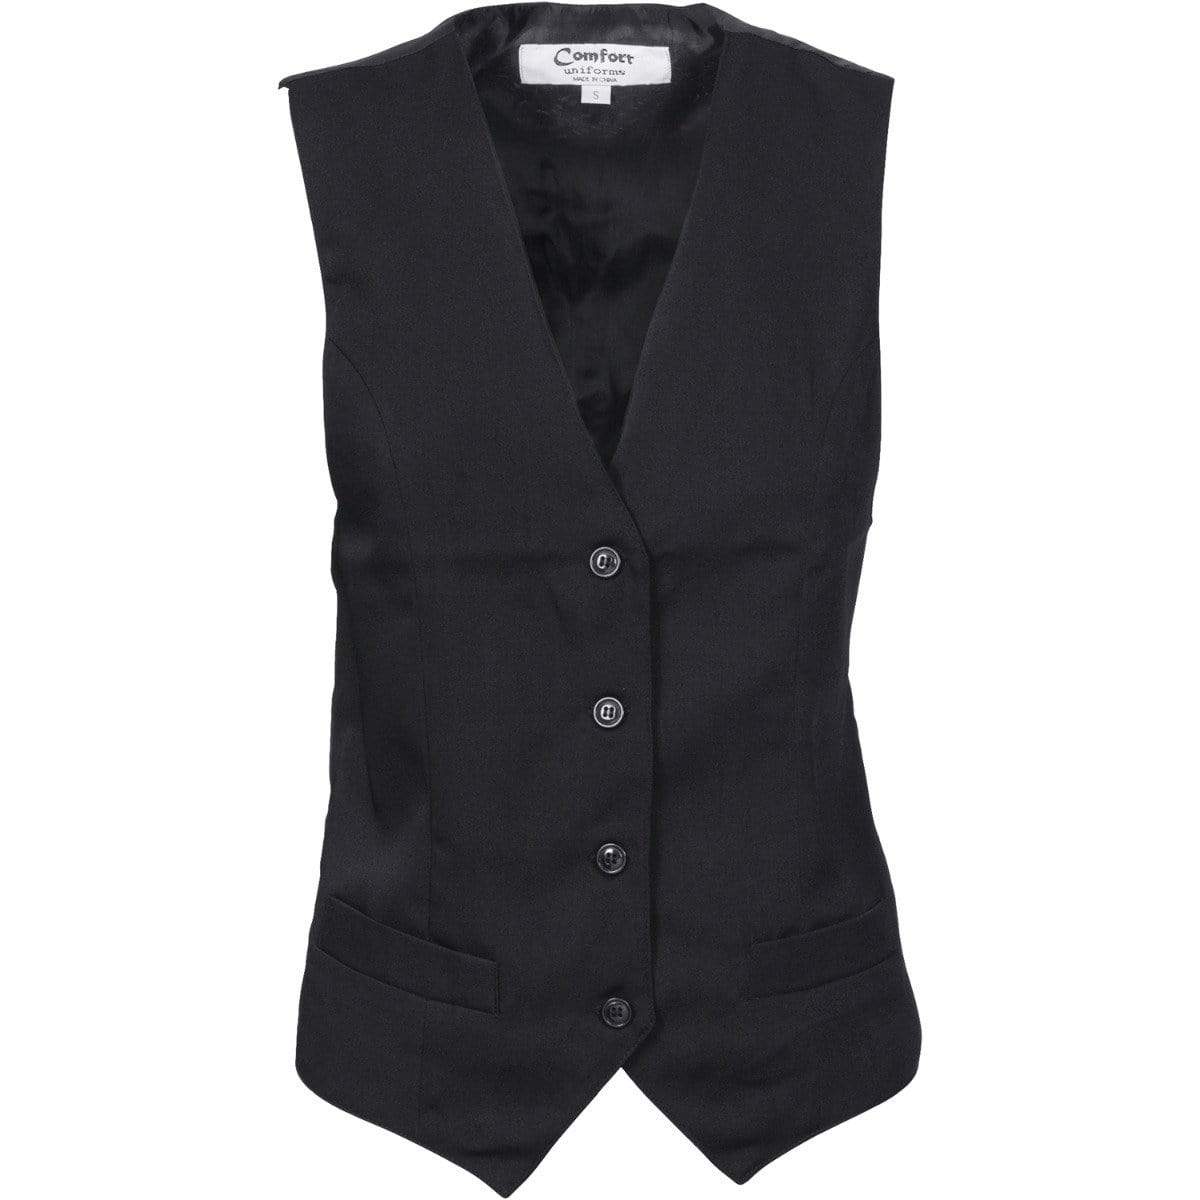 Dnc Workwear Women’s Black Vest - 4302 Hospitality & Chefwear DNC Workwear Black 2XL 